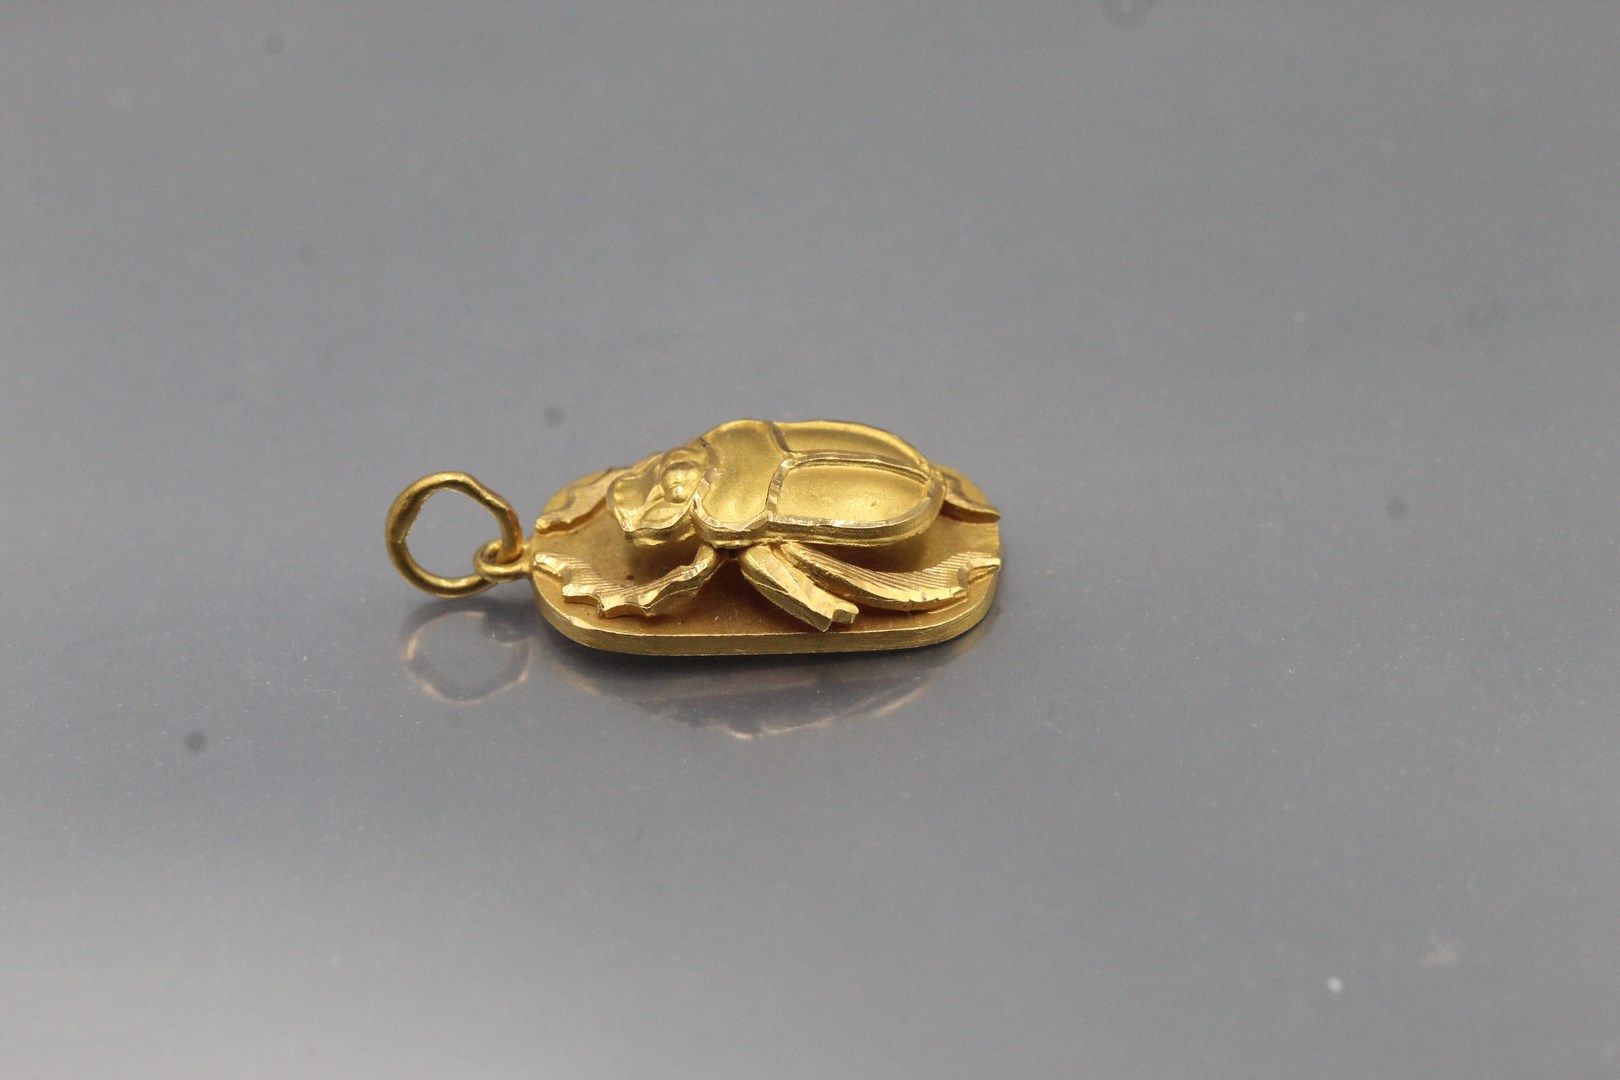 Null 黄金吊坠造型的甲虫。

重量：4.47克。